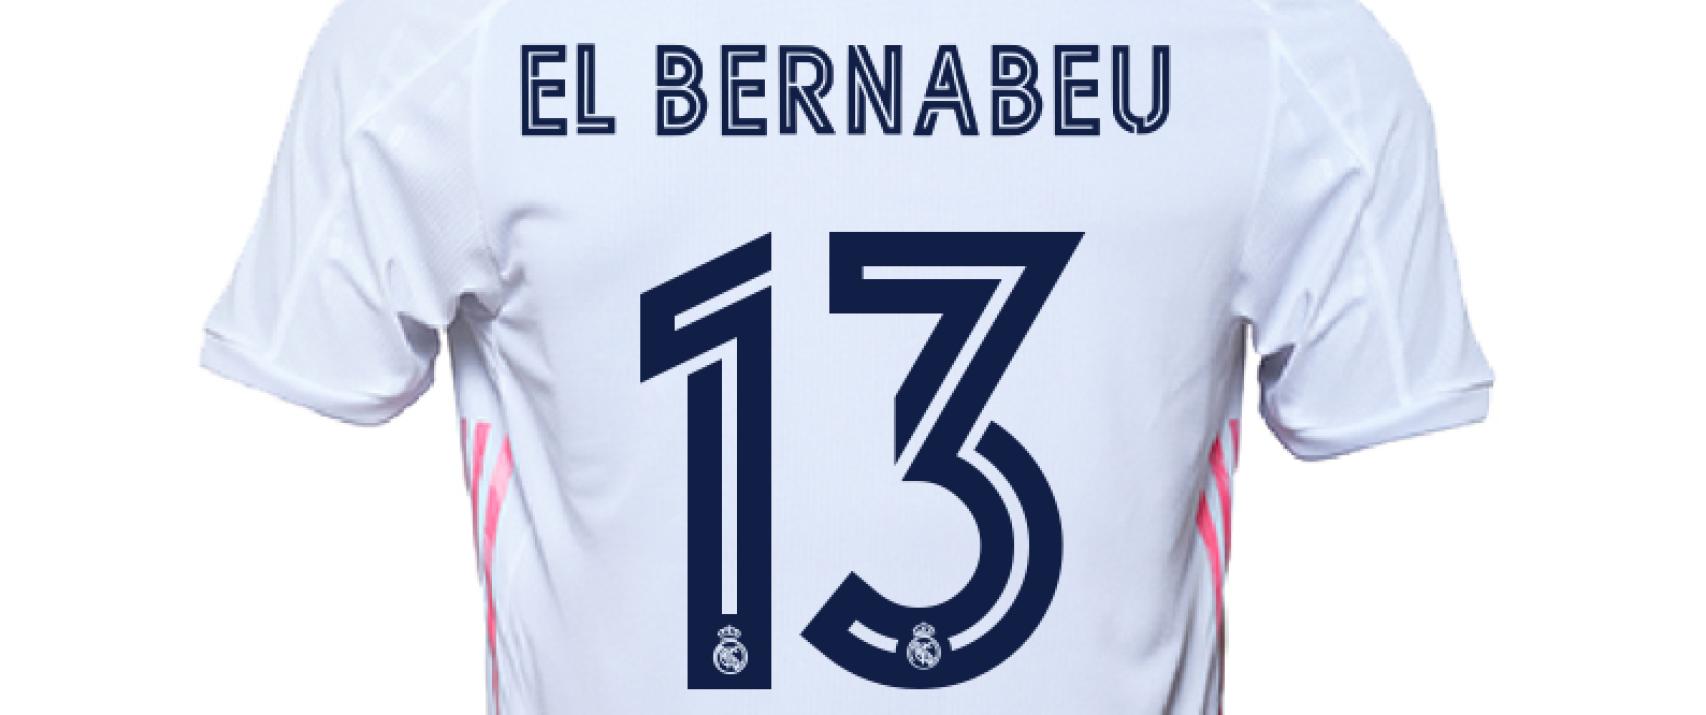 Camiseta del Real Madrid 2020/21 personalizada